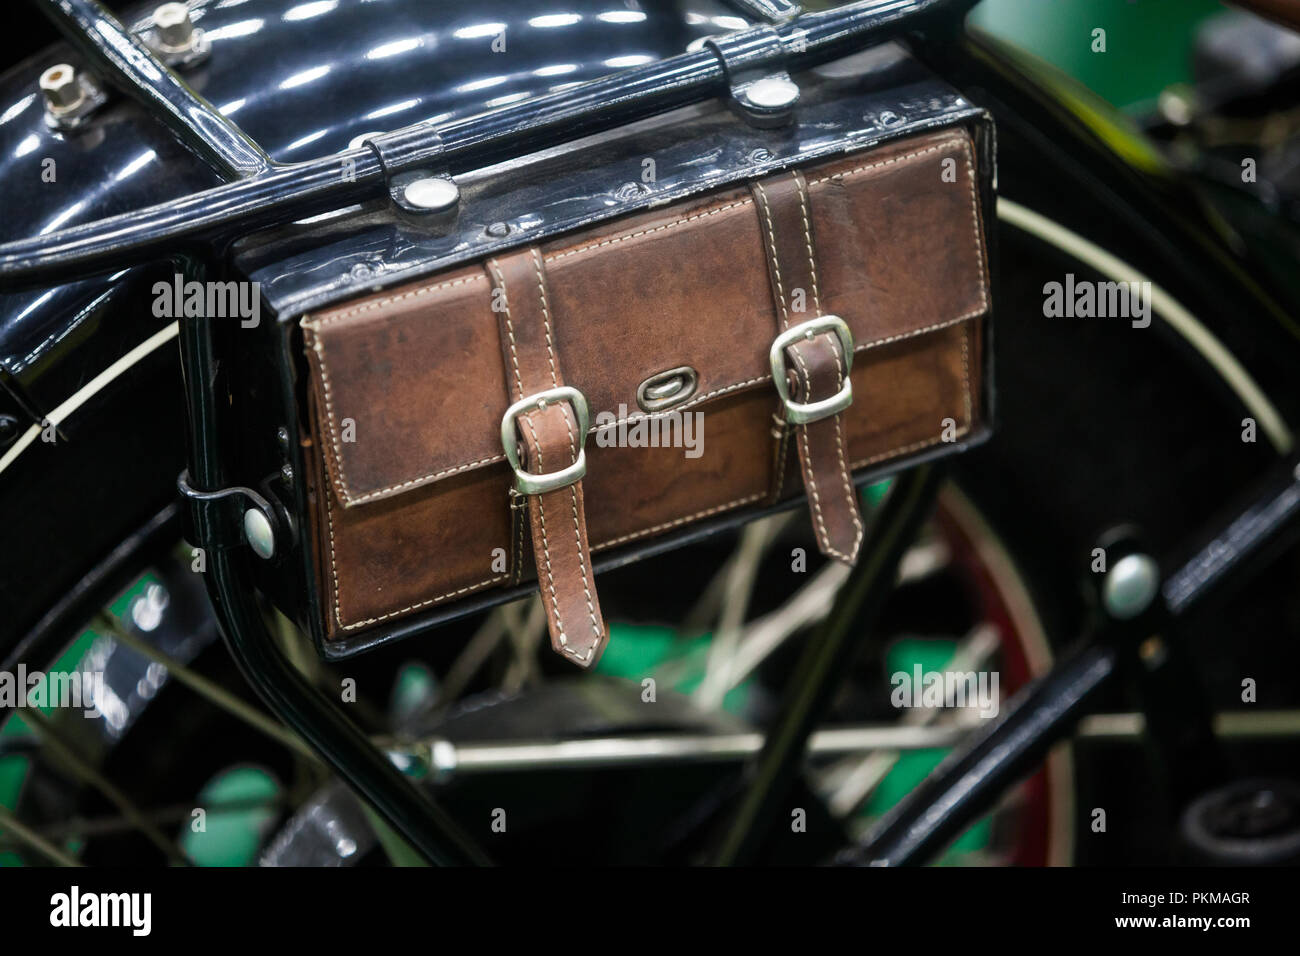 Nahaufnahme von einem Oldtimer Motorrad Leder Sattel Tasche Stockfotografie  - Alamy